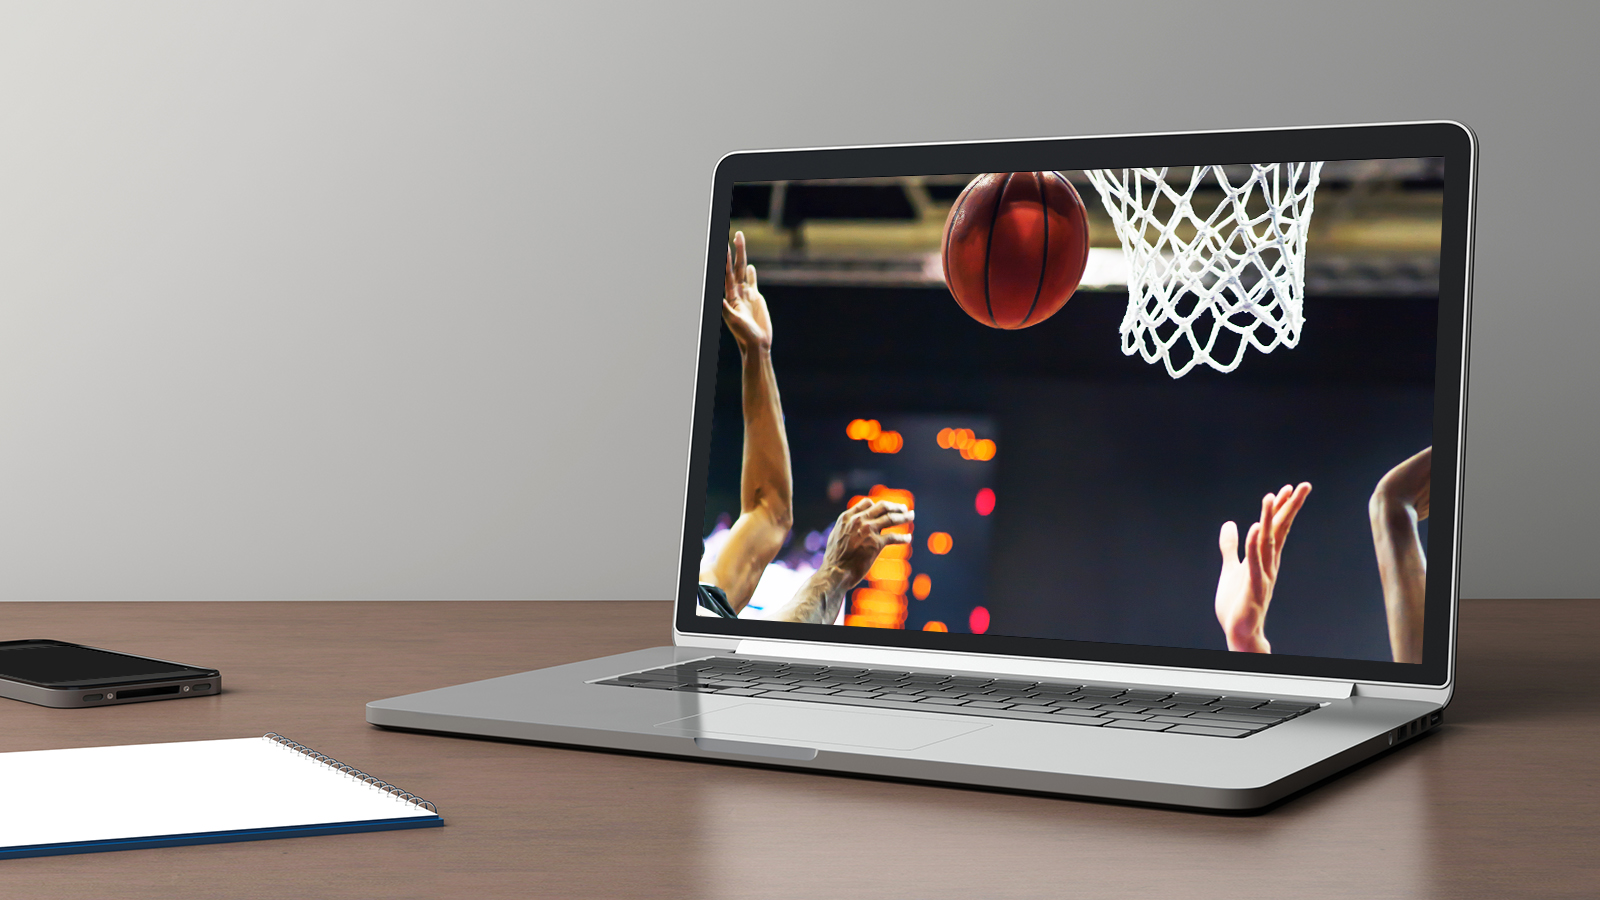 open laptop showing basketball game streaming